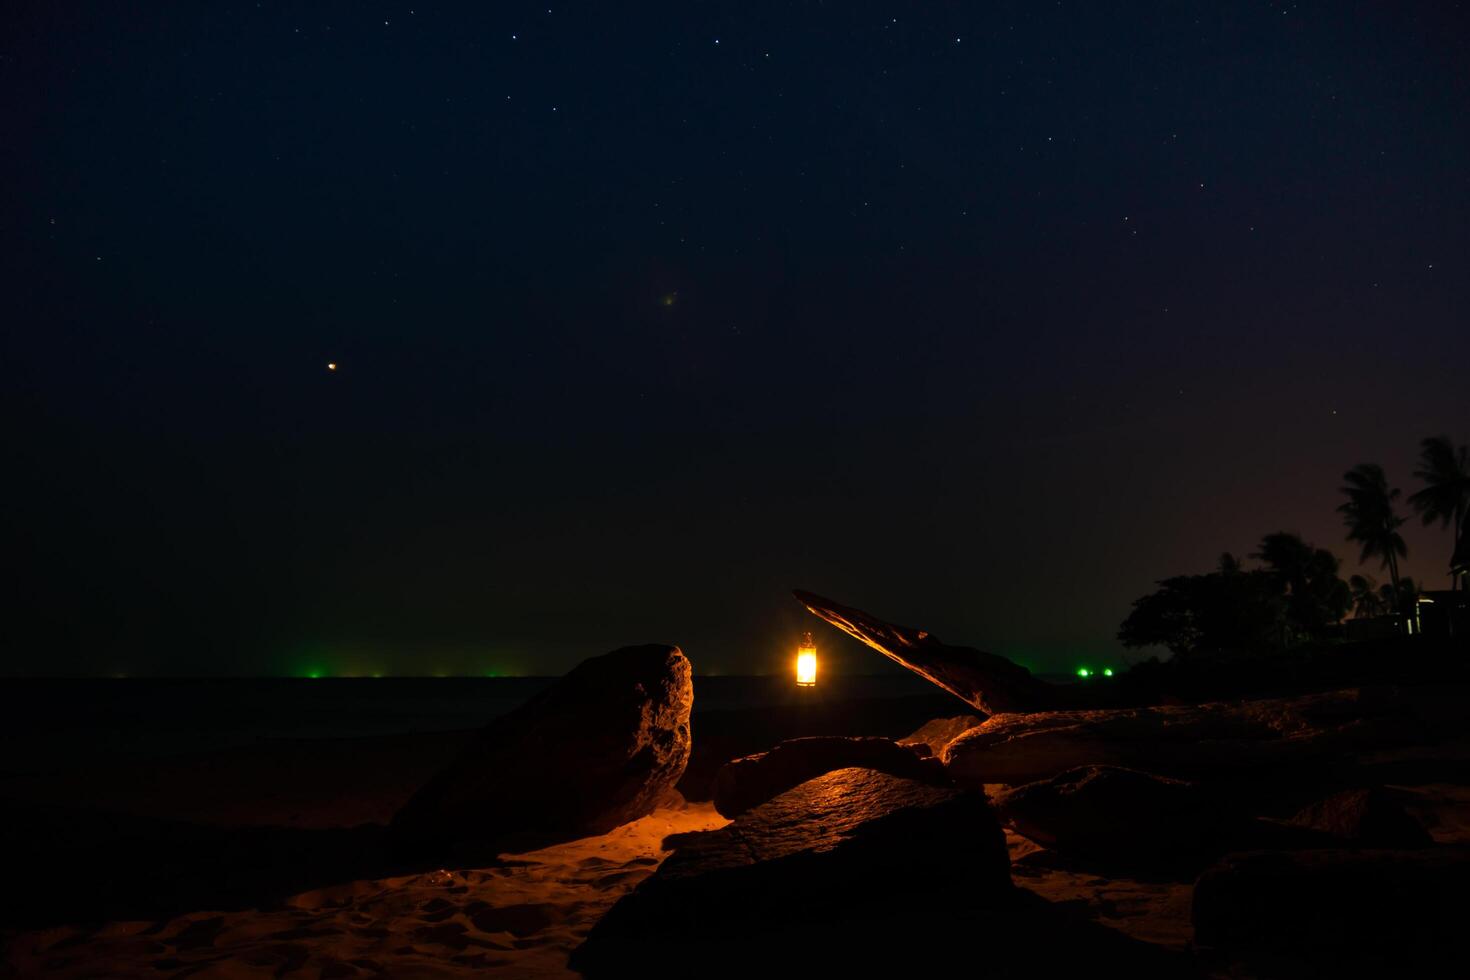 Lanterns on the beach in the dark night. photo